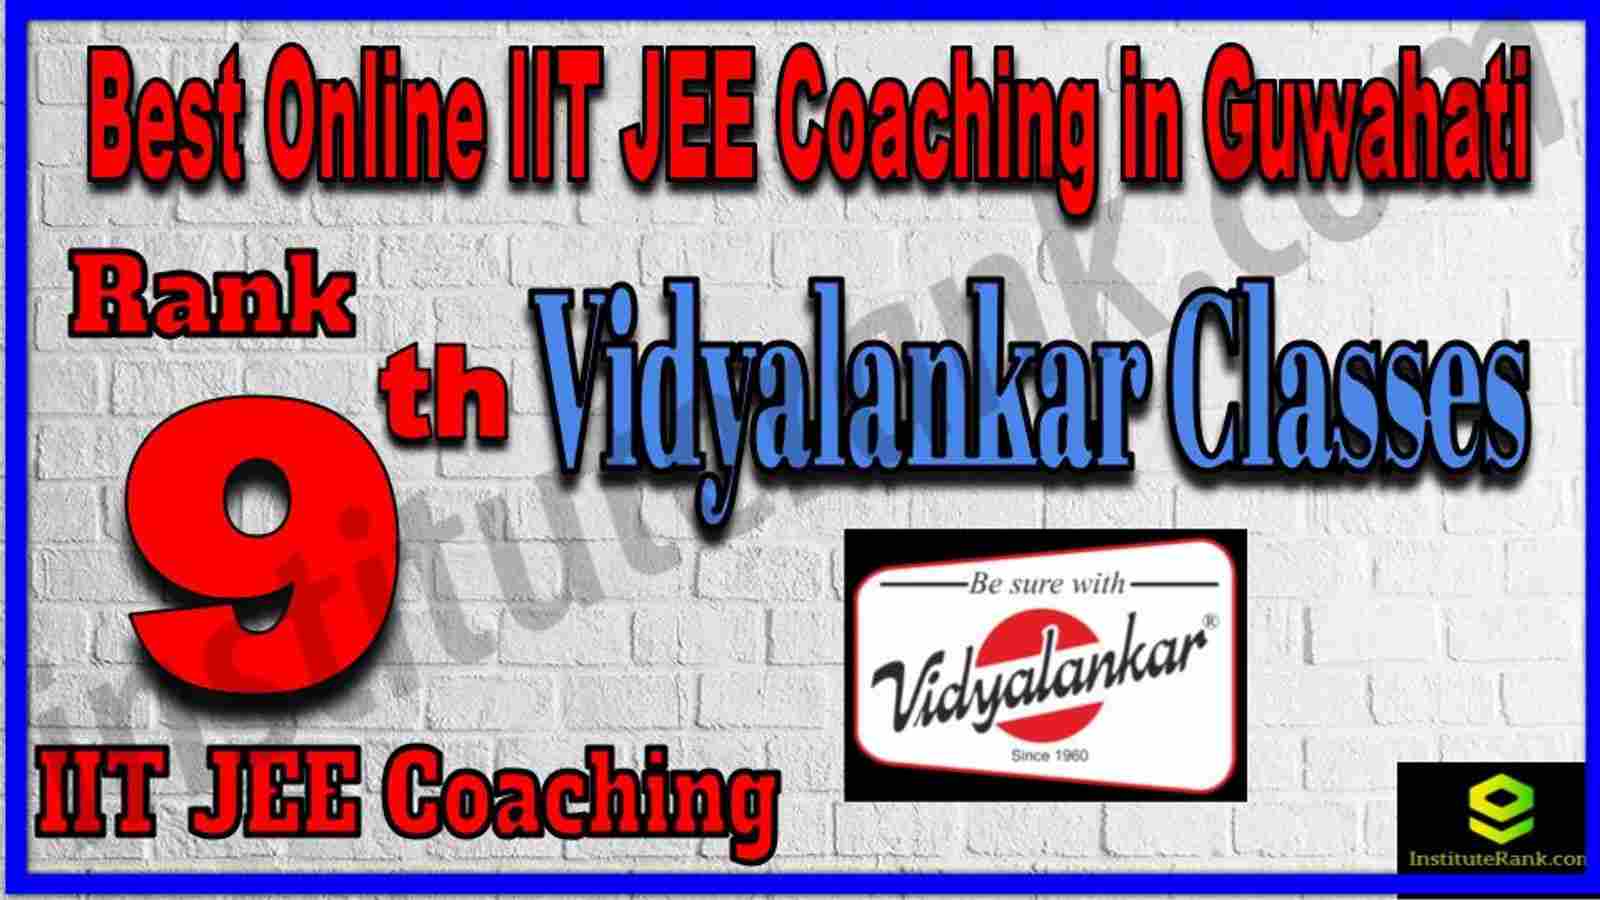 Rank 9th Best Online IIT JEE Coaching in Guwahati